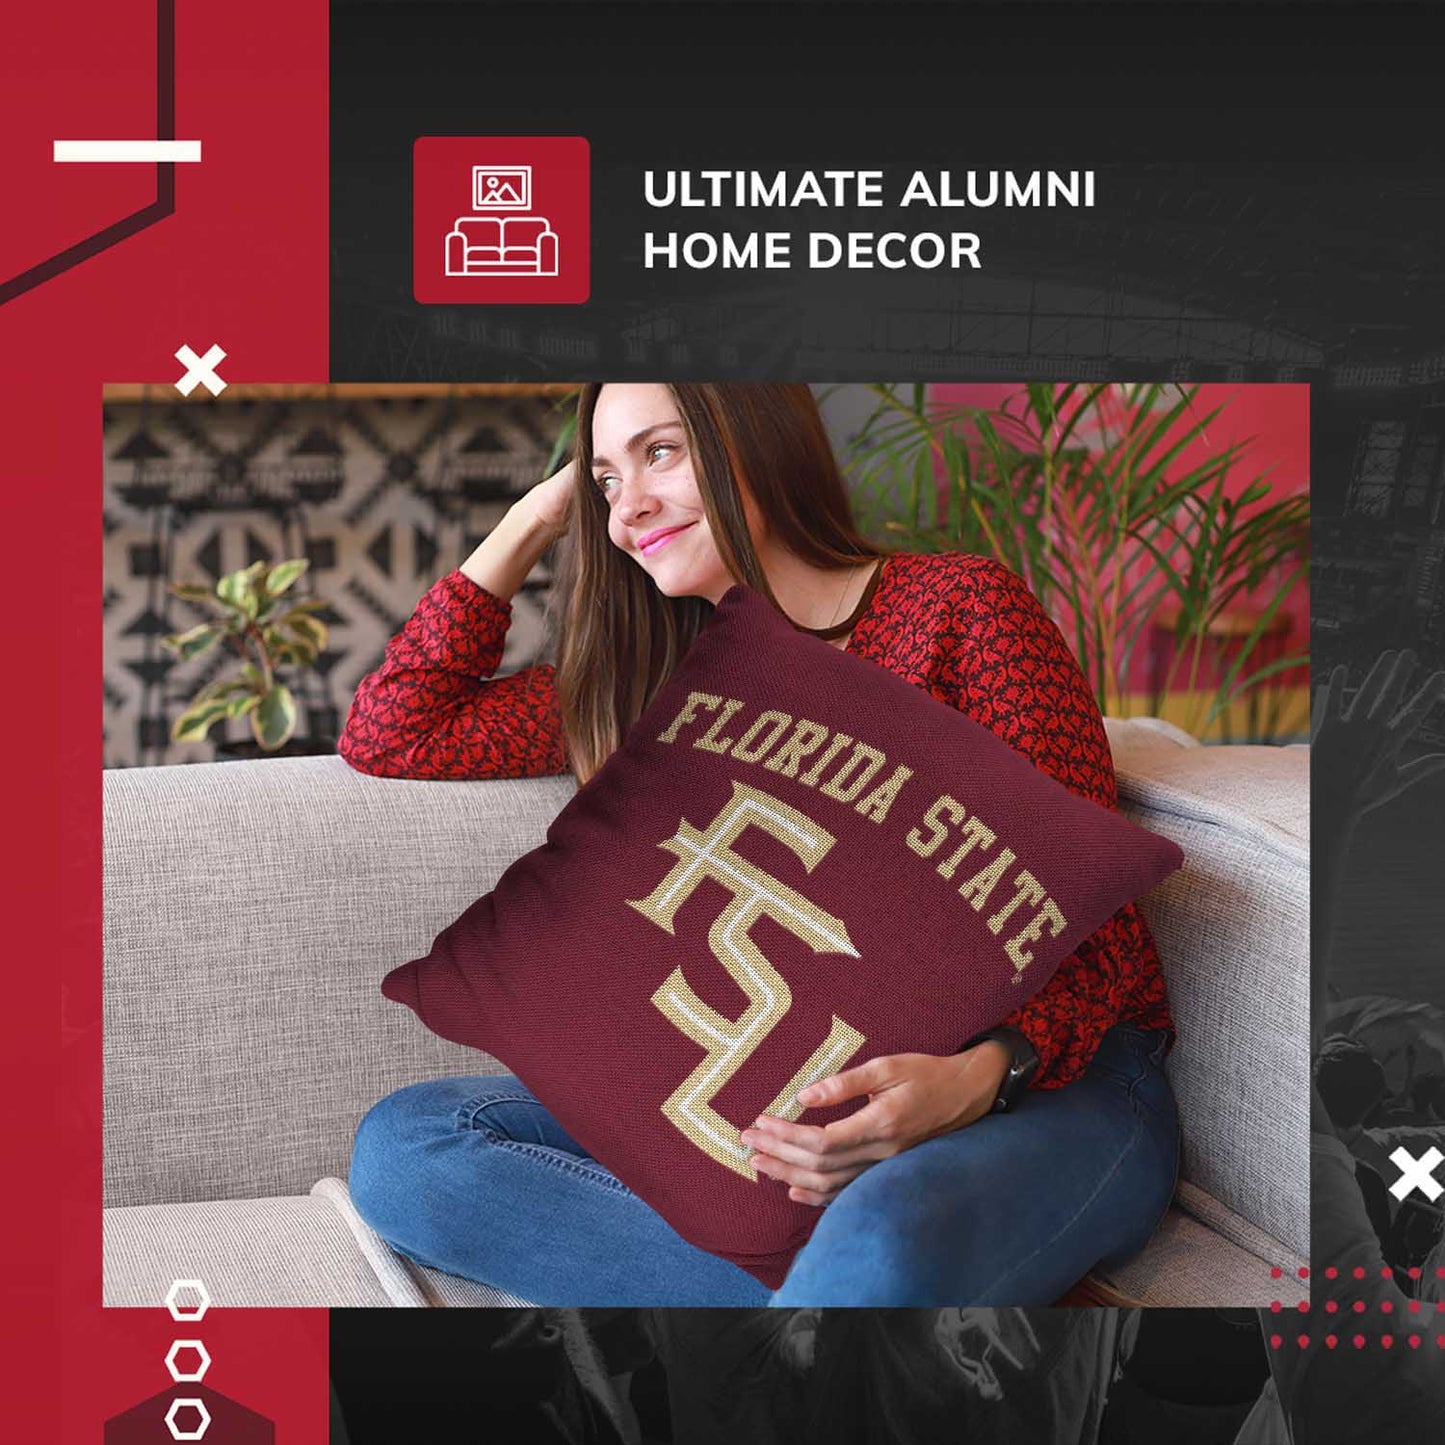 Florida State Seminoles NCAA Decorative Pillow - Maroon